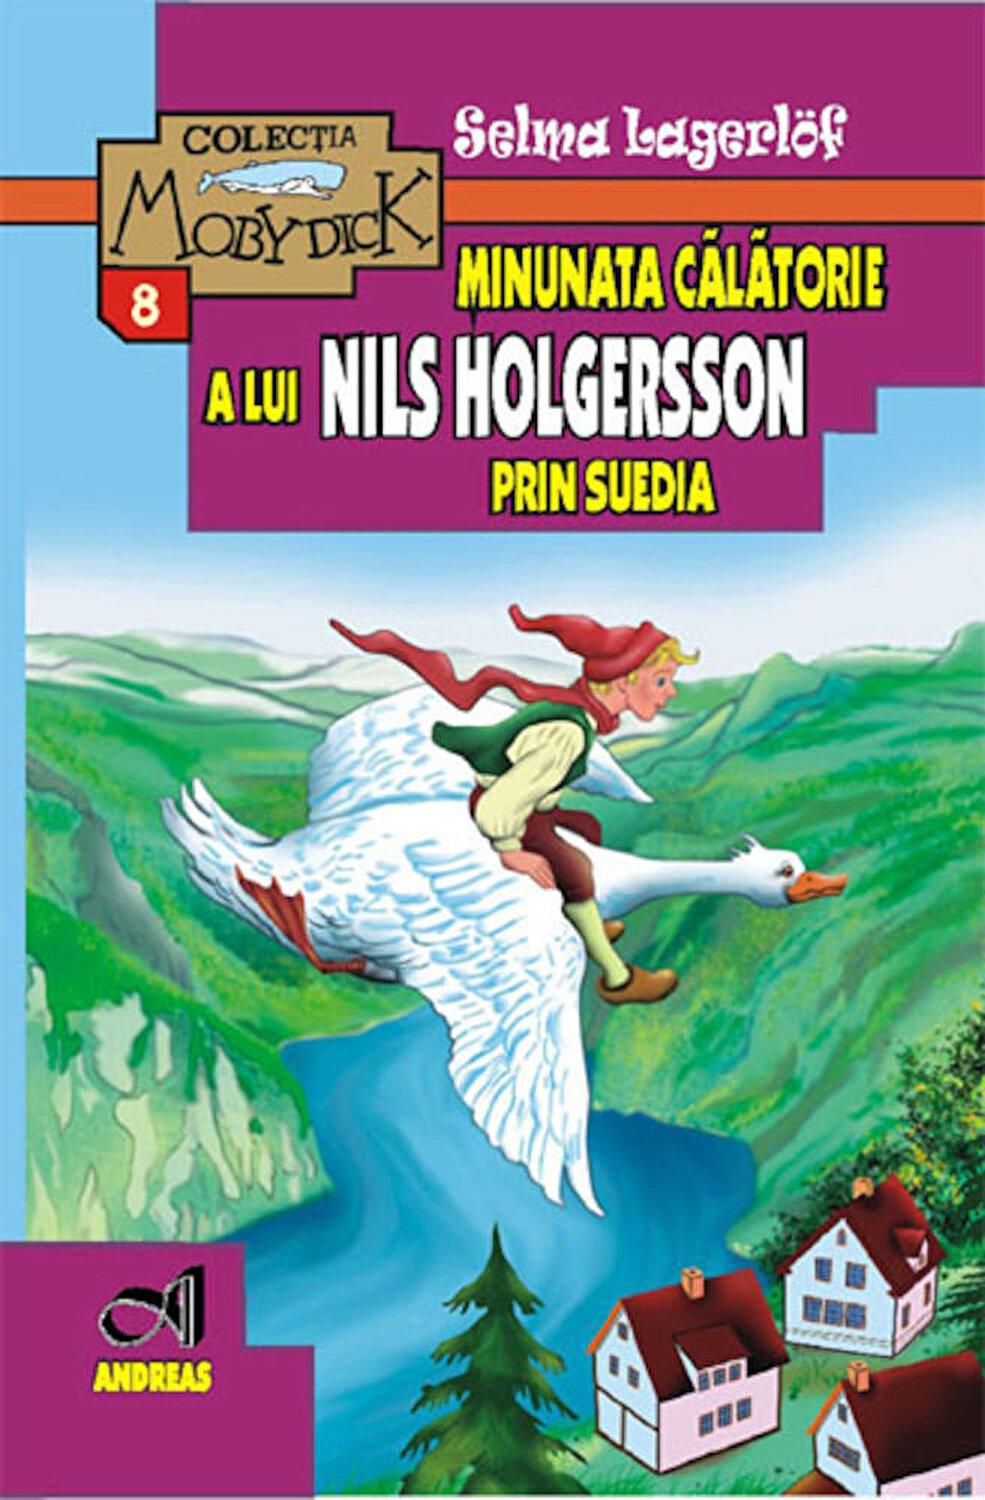 Minunata calatorie a lui Nils Holgersson in Suedia | Selma Legerlof Andreas Carte